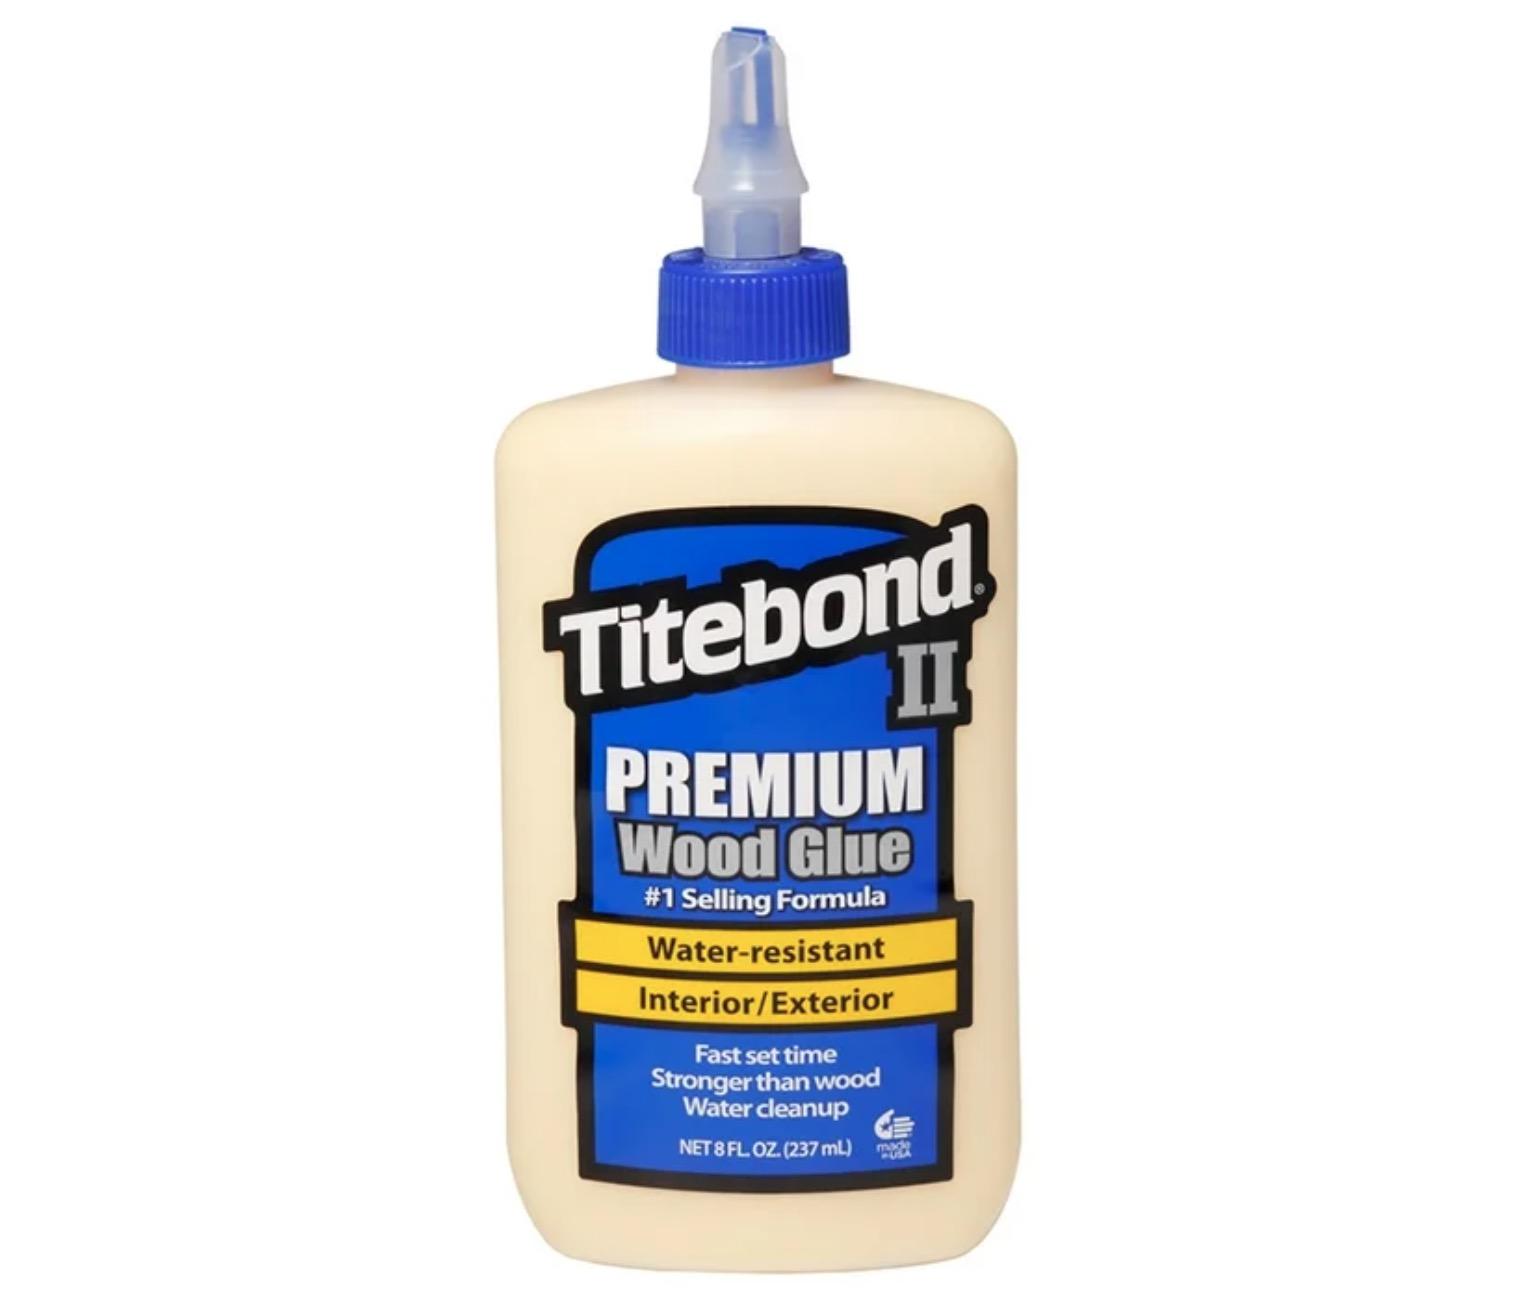 Titebond II Premium Wood Glue for $2.19